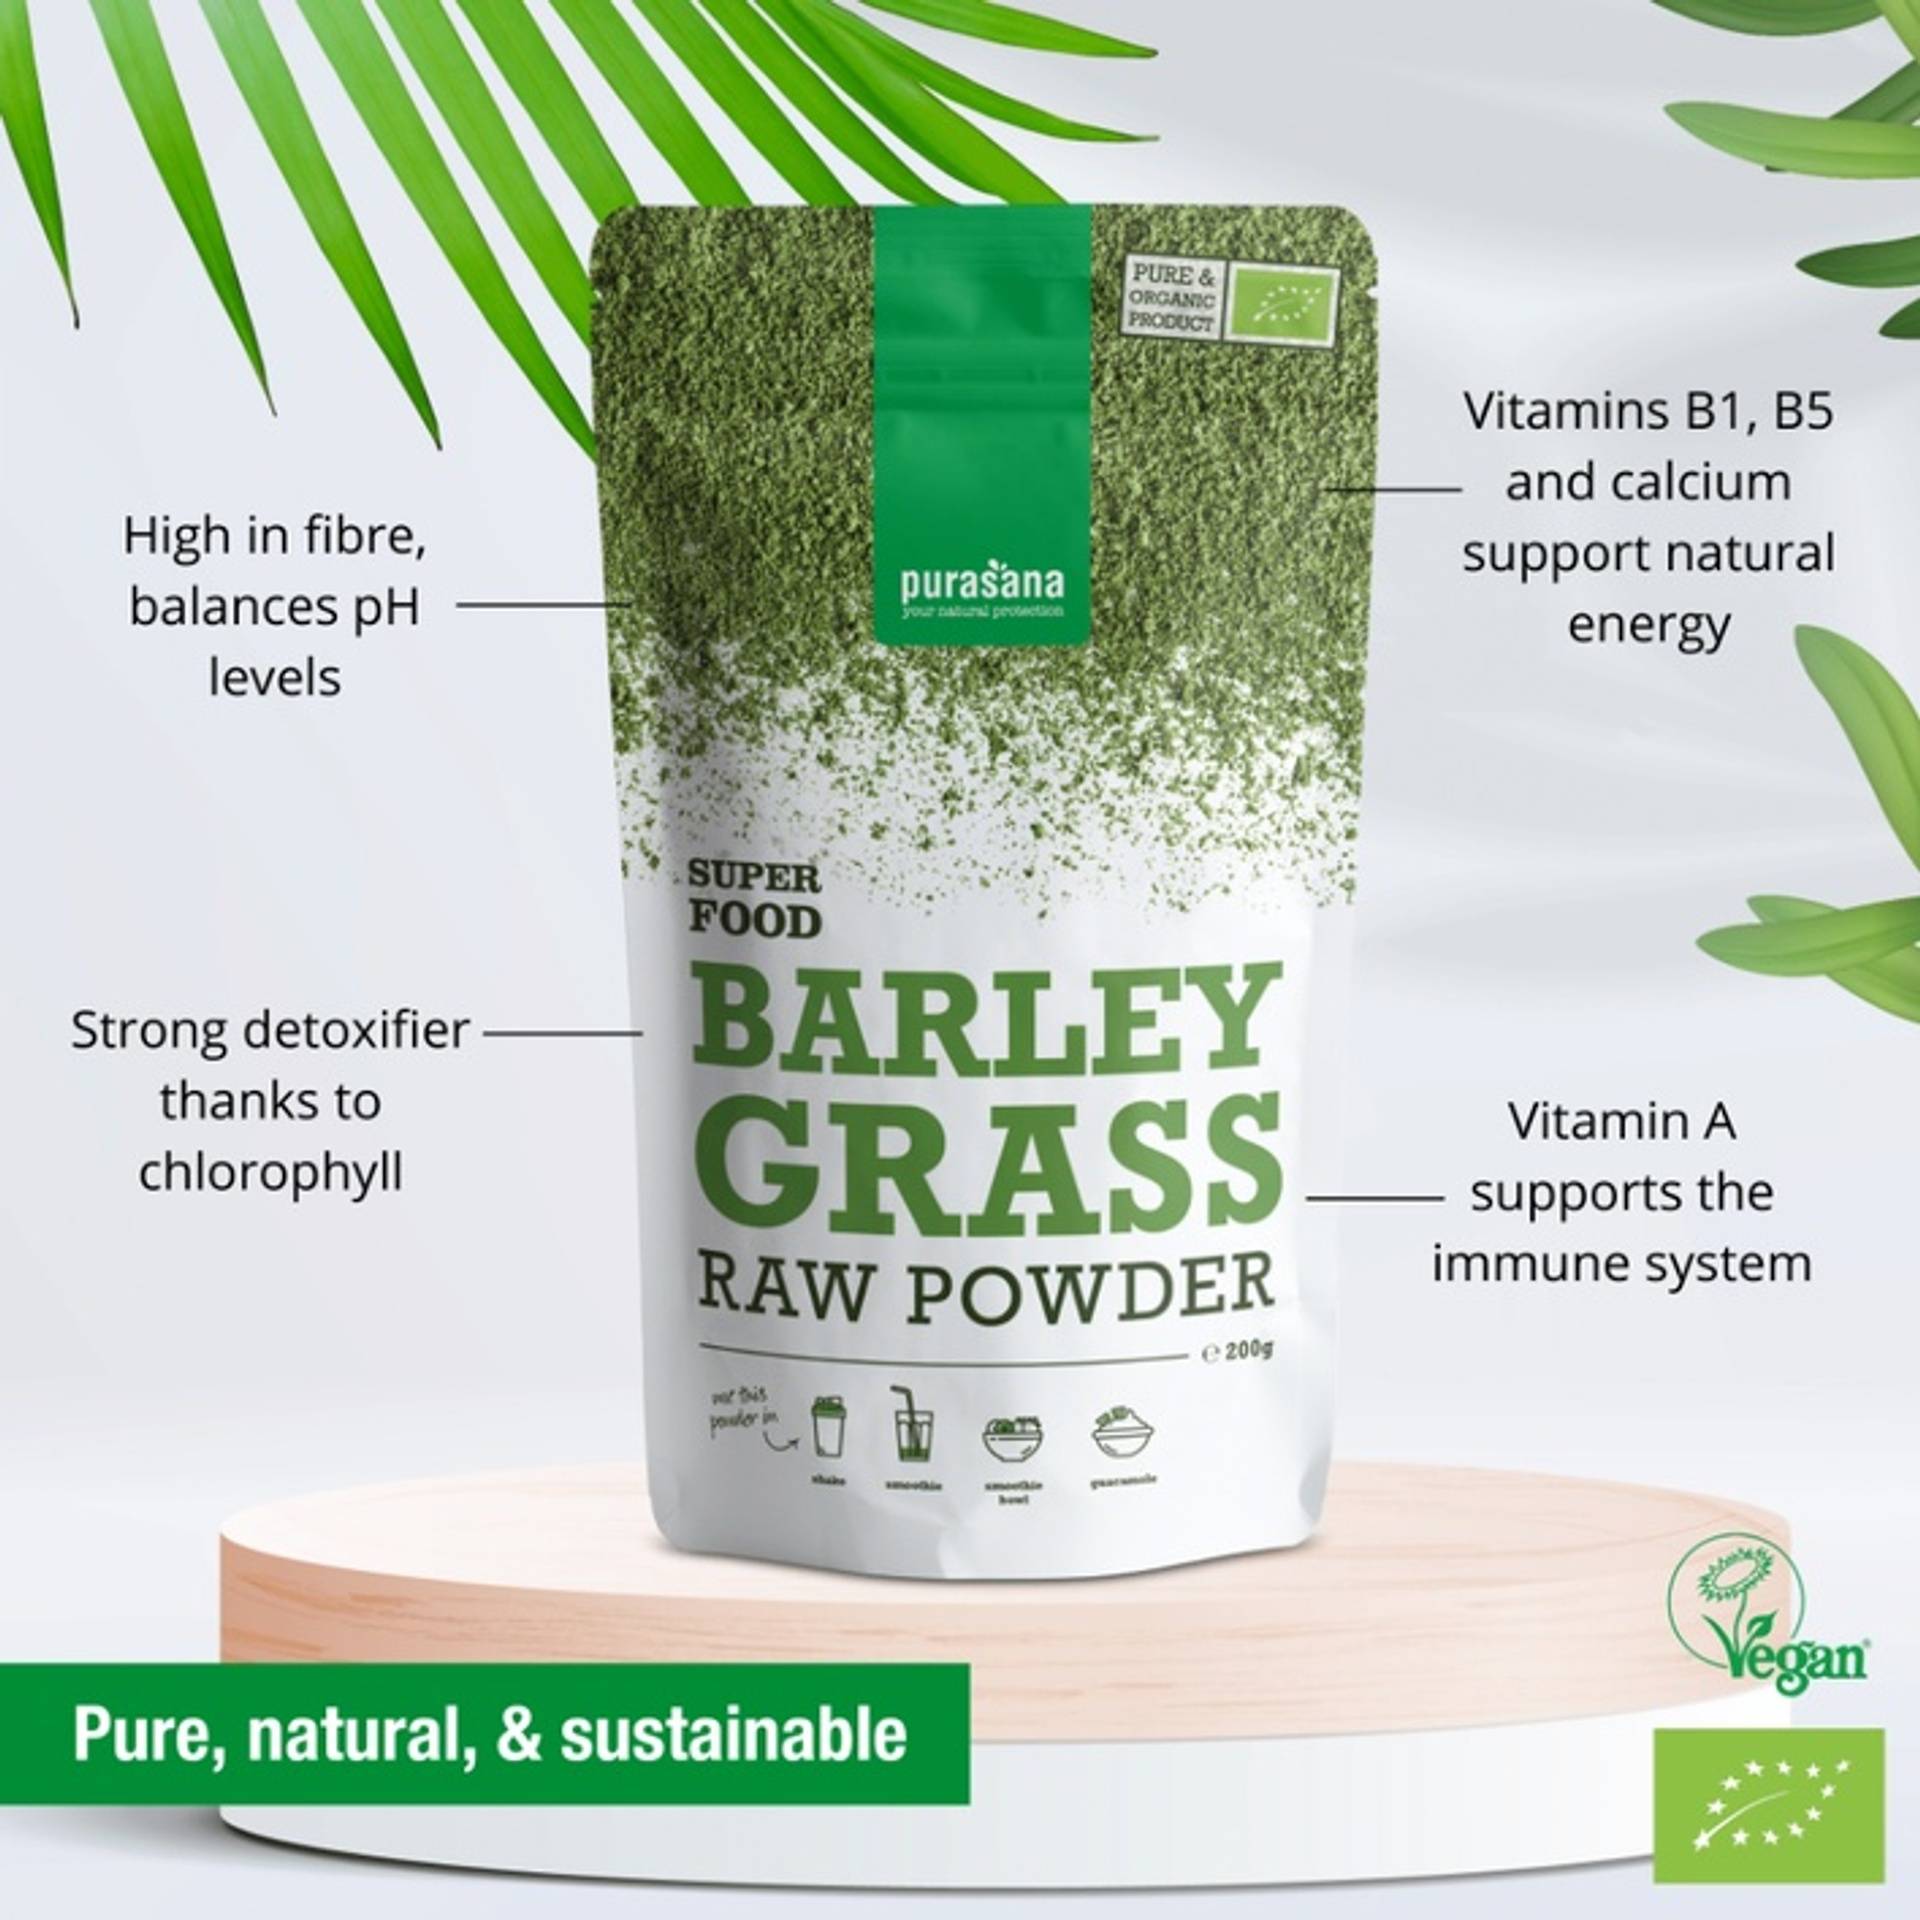 Barley Grass Raw Powder details.png